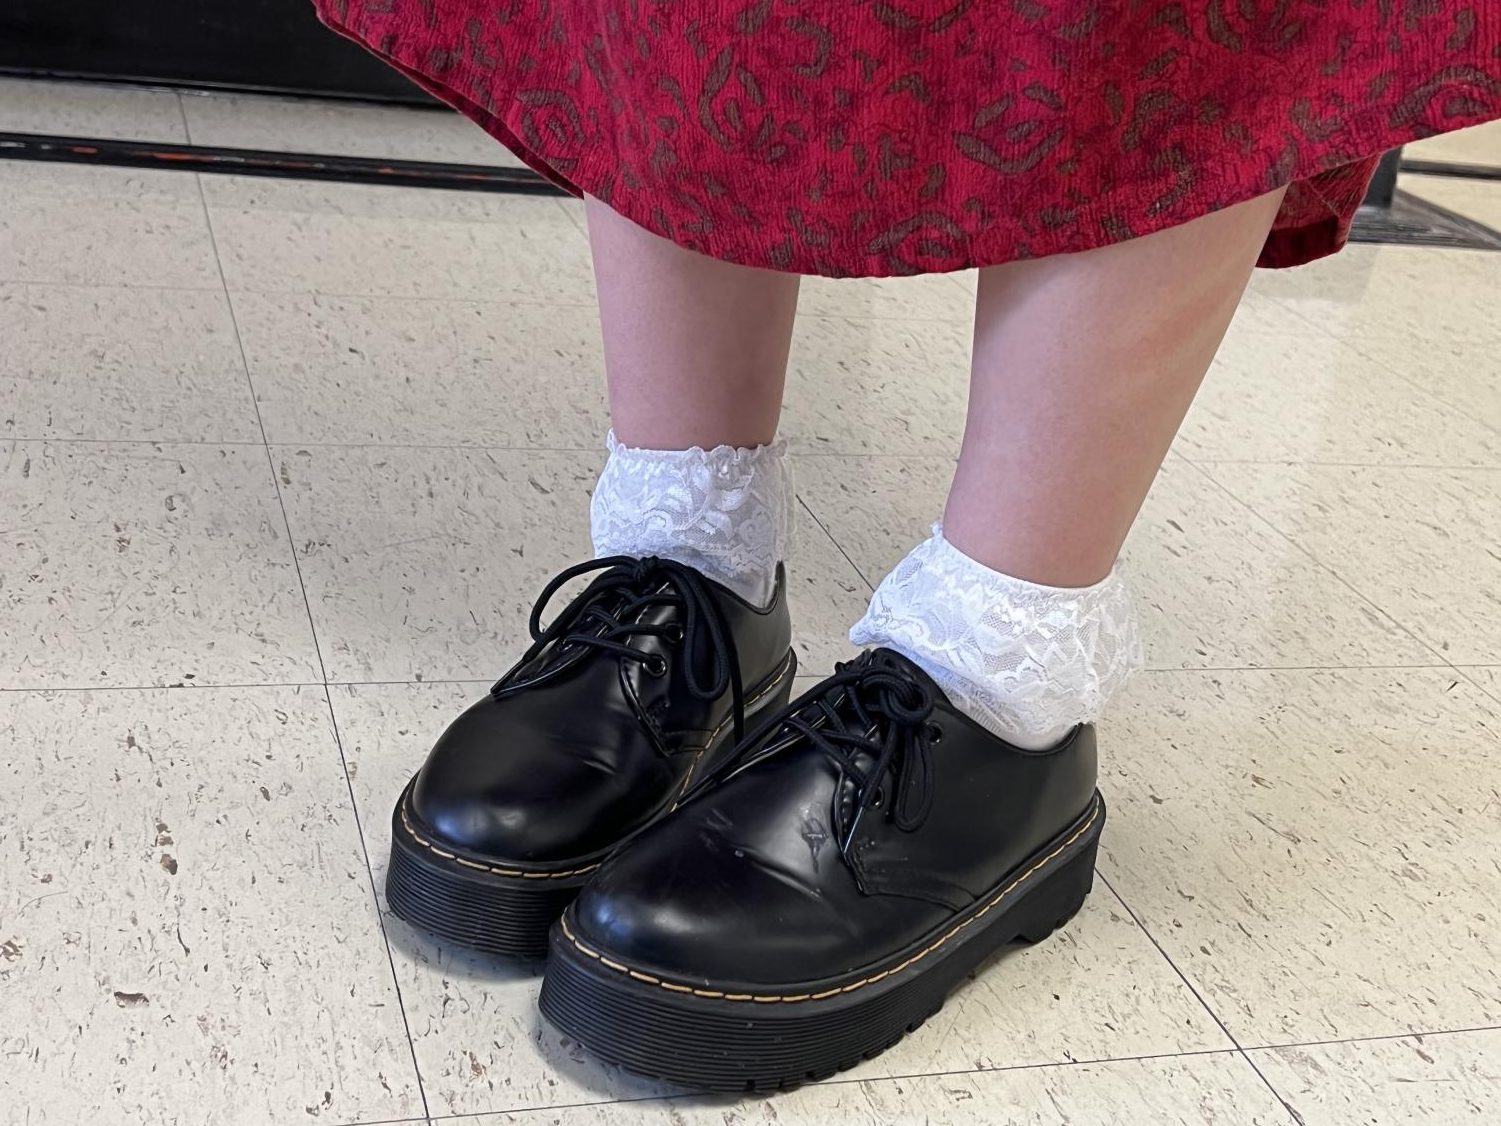 cute black shoes with white ruffle socks on feet